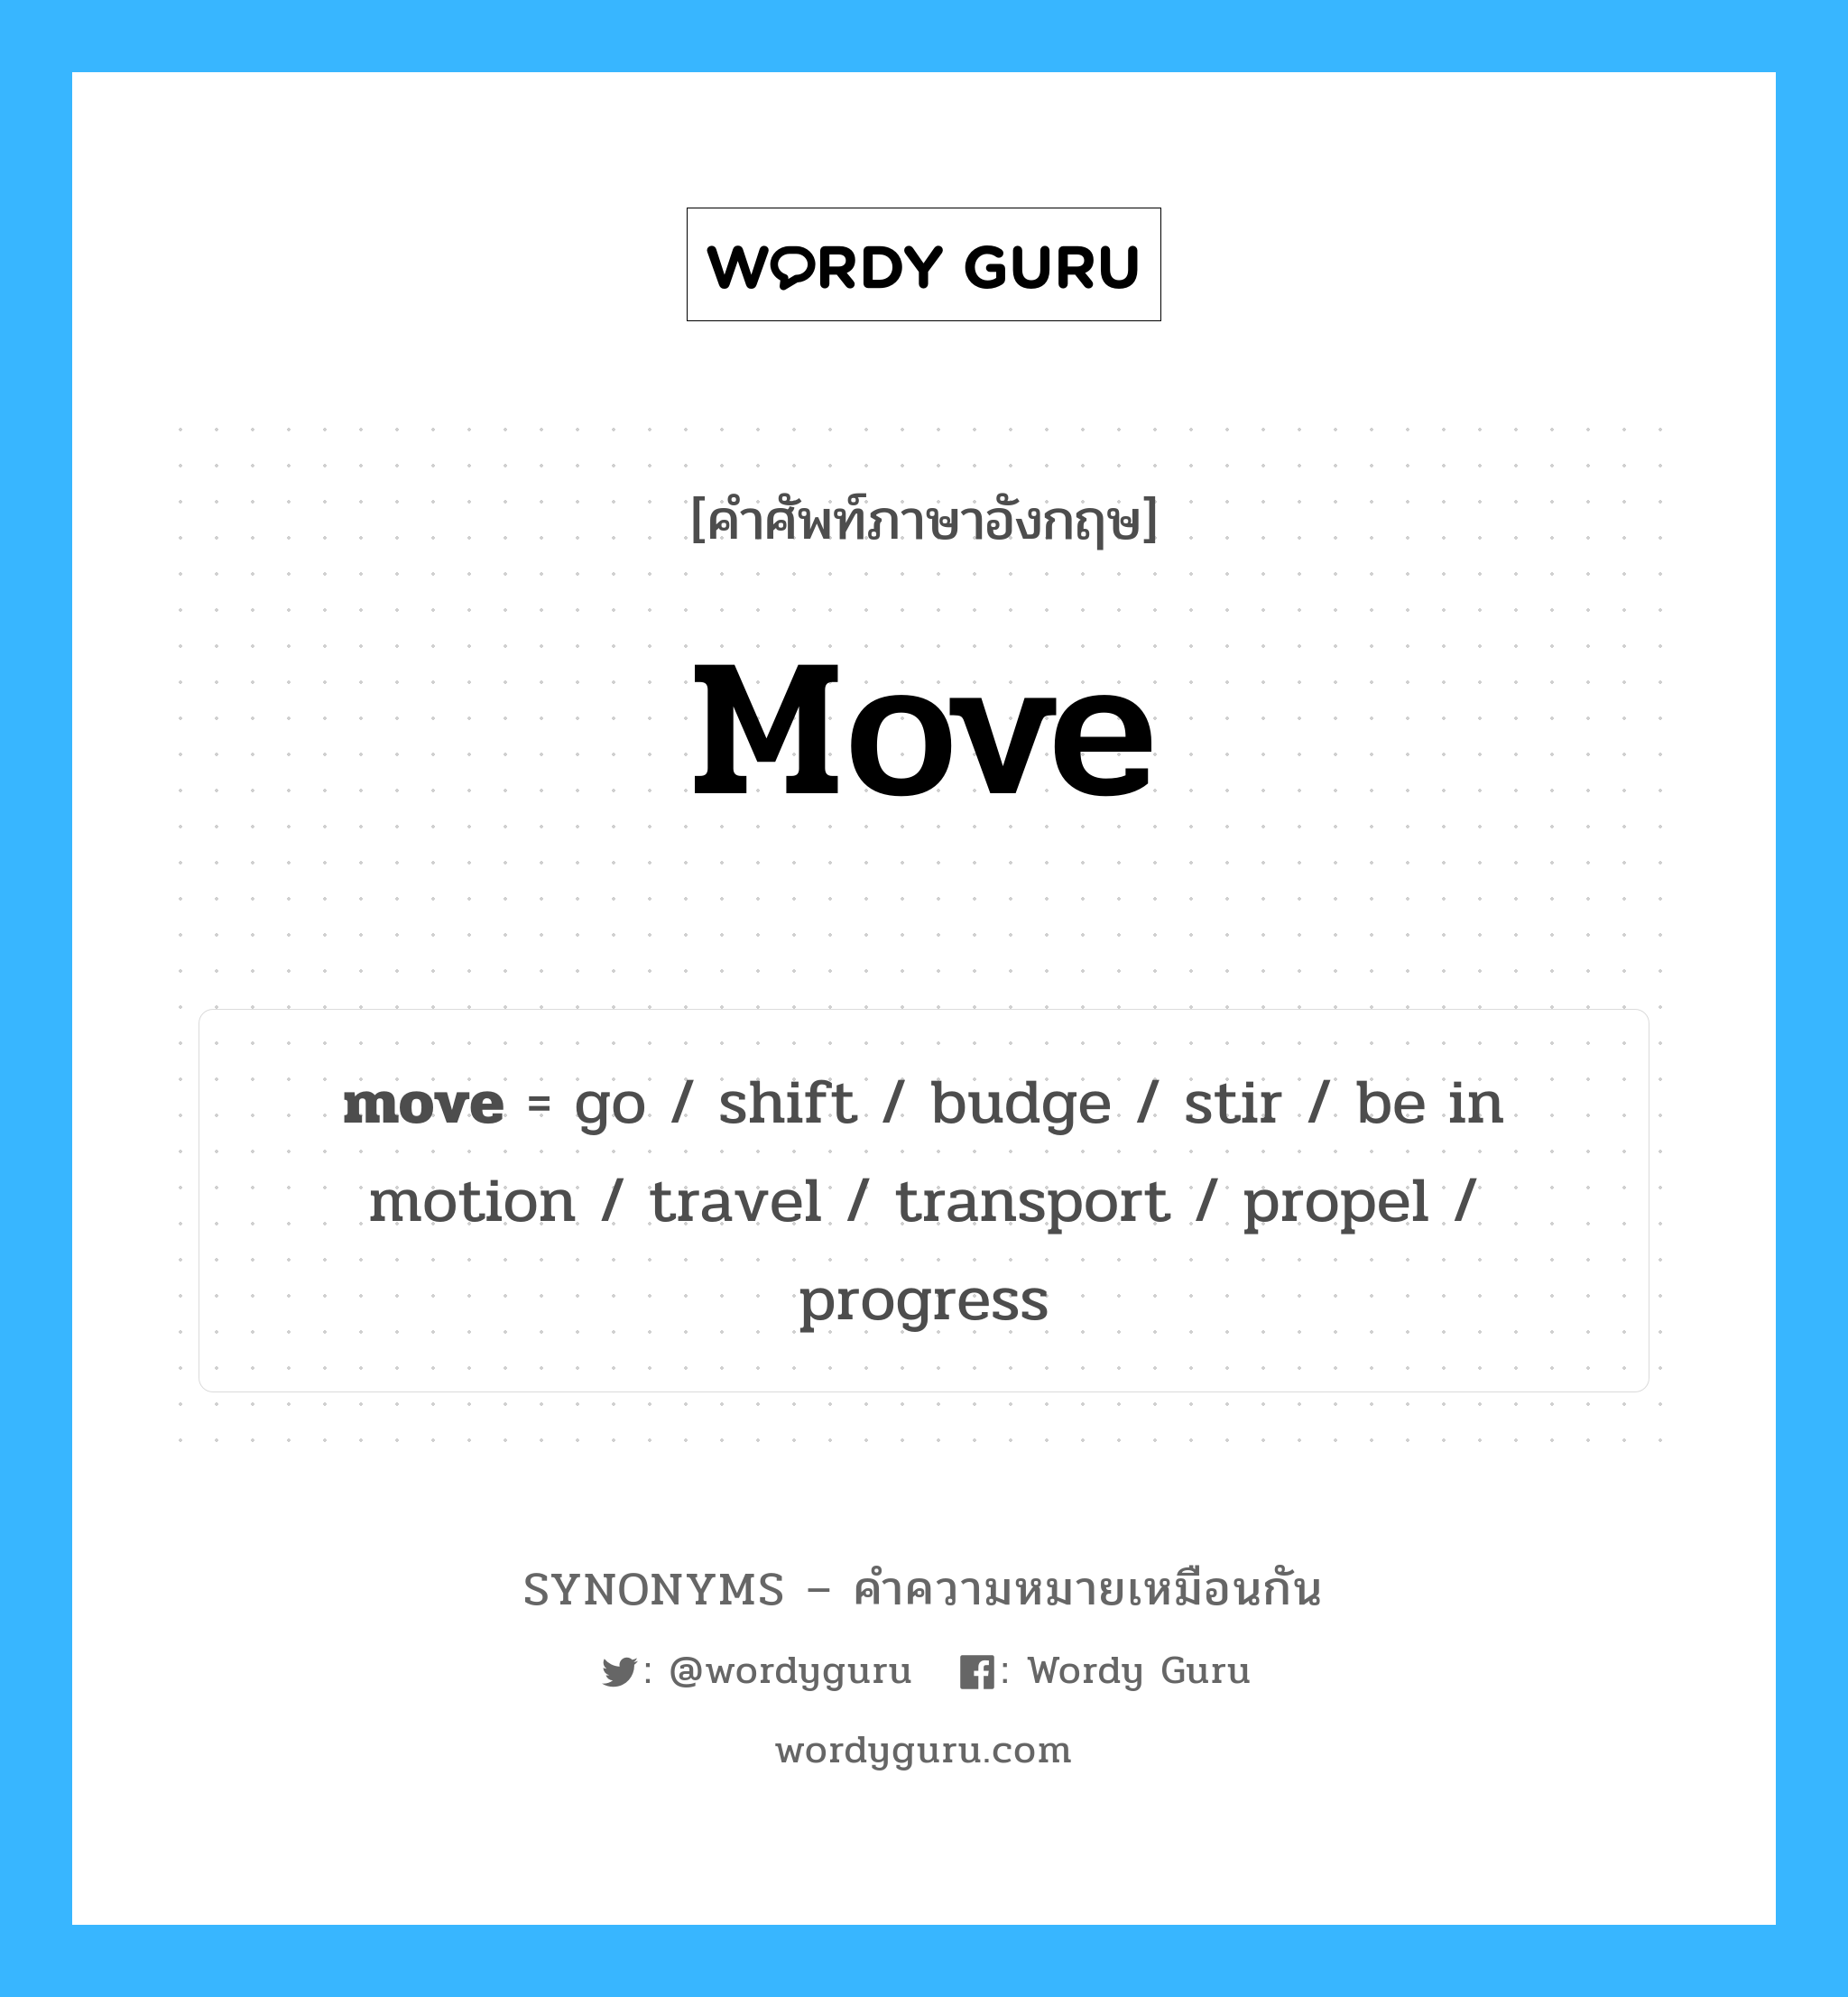 go เป็นหนึ่งใน move และมีคำอื่น ๆ อีกดังนี้, คำศัพท์ภาษาอังกฤษ go ความหมายคล้ายกันกับ move แปลว่า ไป หมวด move